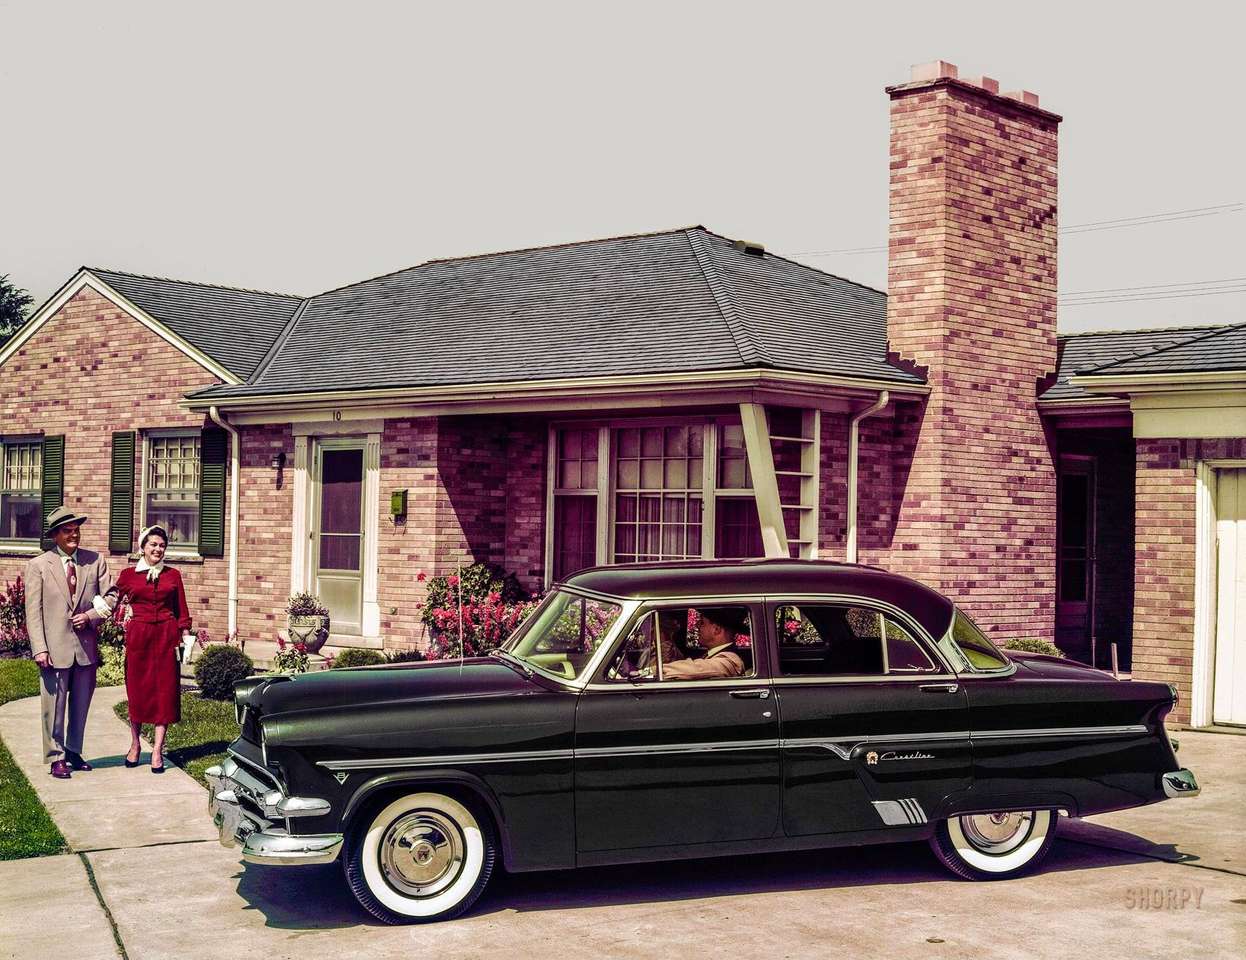 1954 Ford Crestline puzzle online